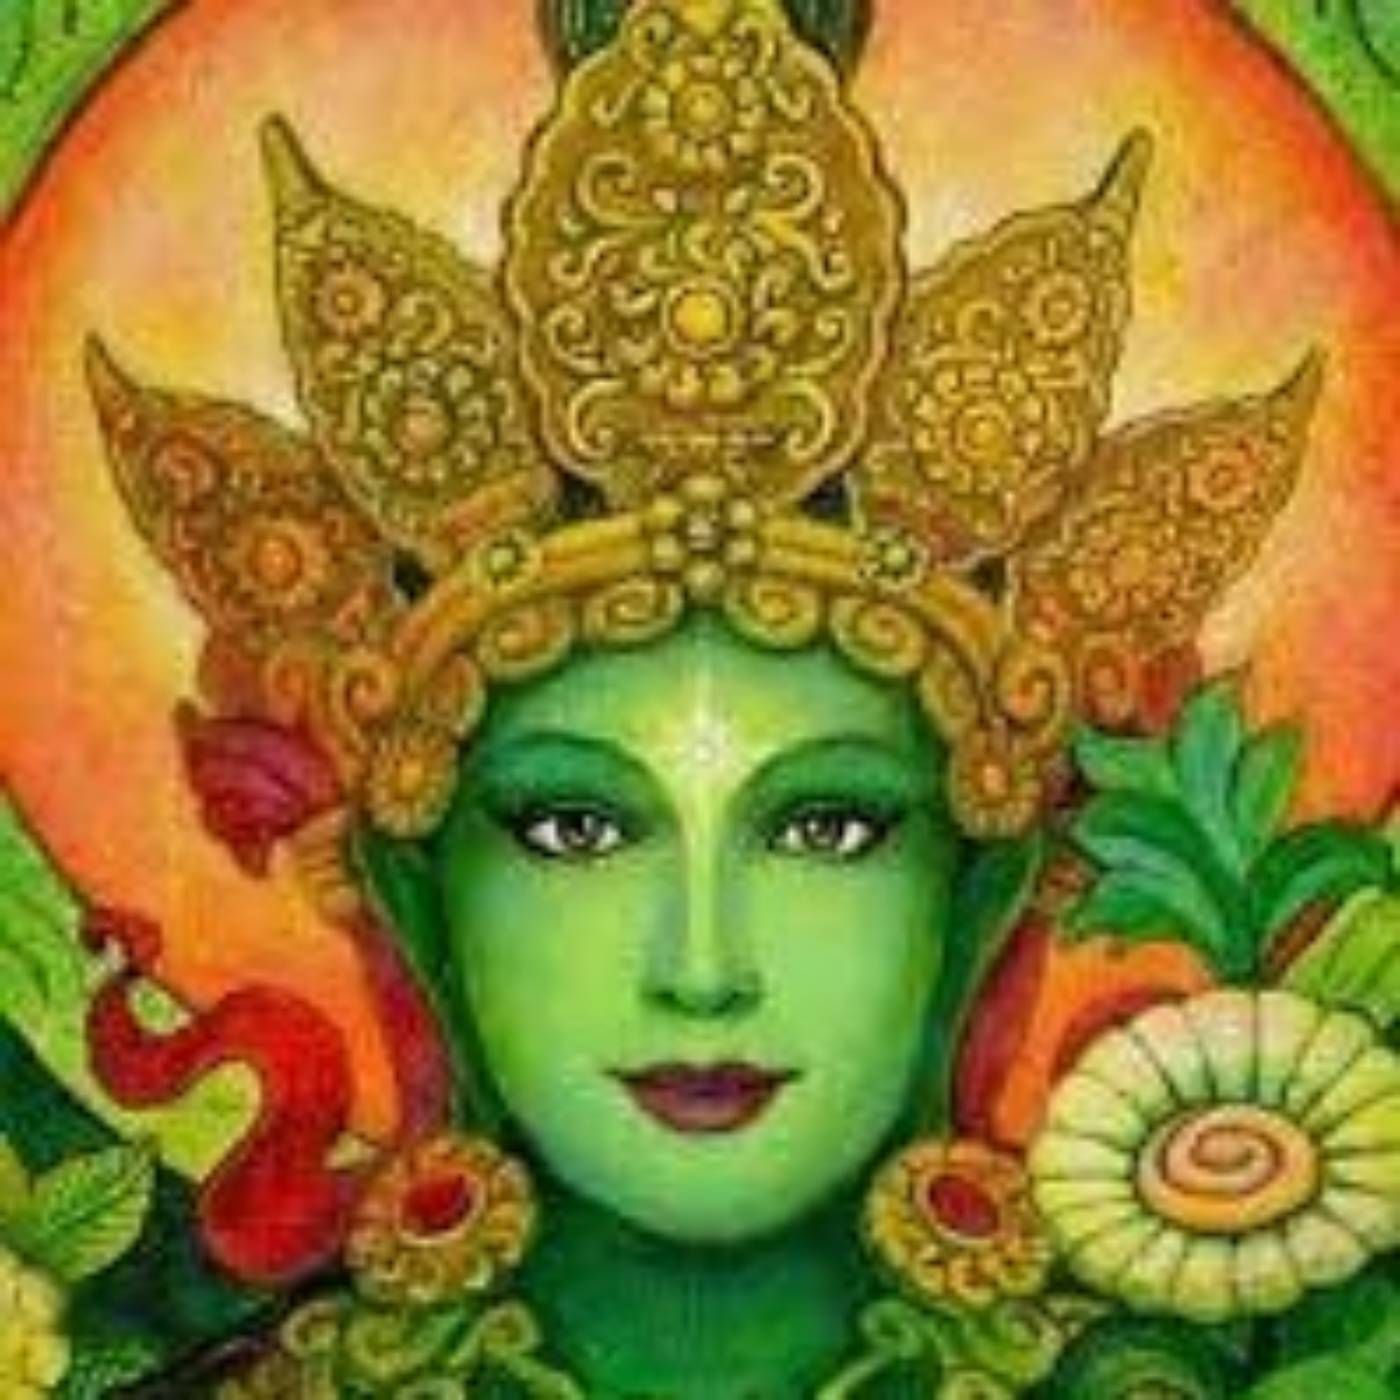 Green Tara - the Buddha of Enlightened Action & White Tara - the Buddha of Compassion